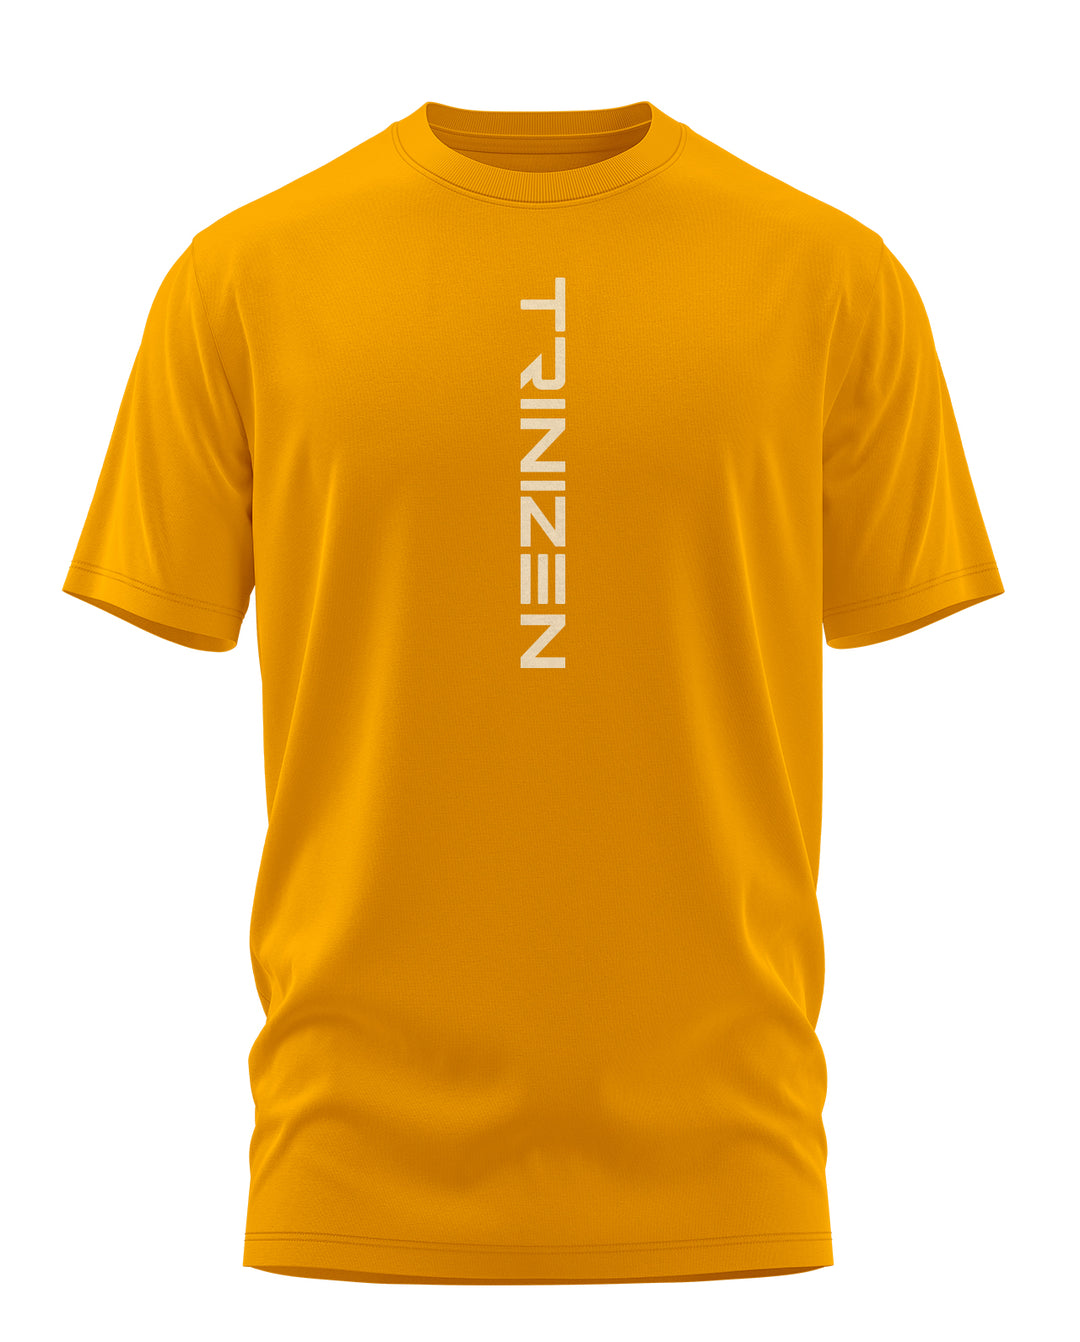 Trinizen Original Cotton T-shirt